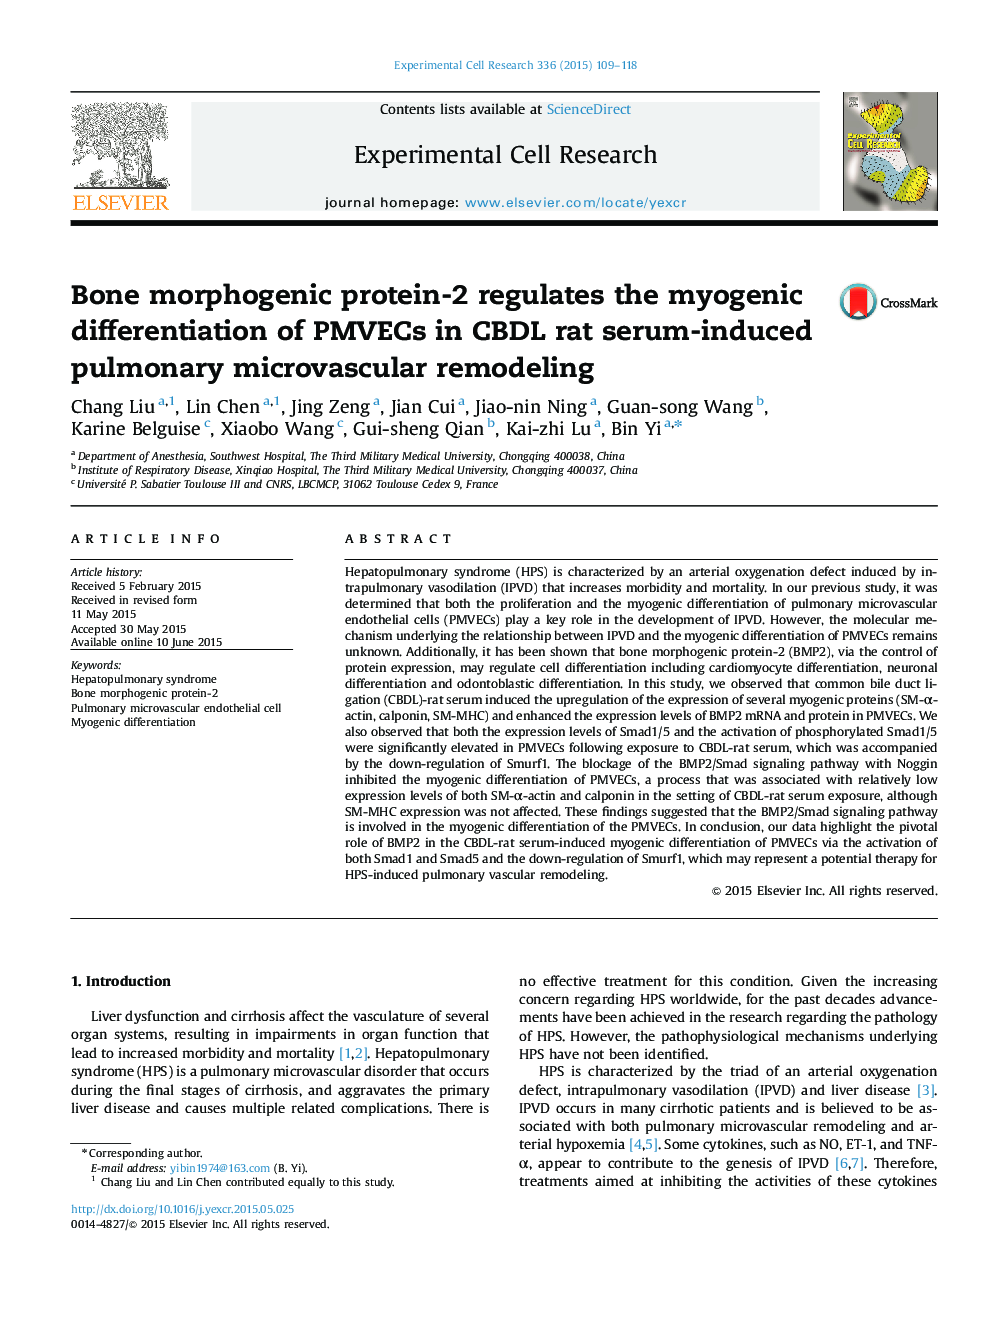 Bone morphogenic protein-2 regulates the myogenic differentiation of PMVECs in CBDL rat serum-induced pulmonary microvascular remodeling